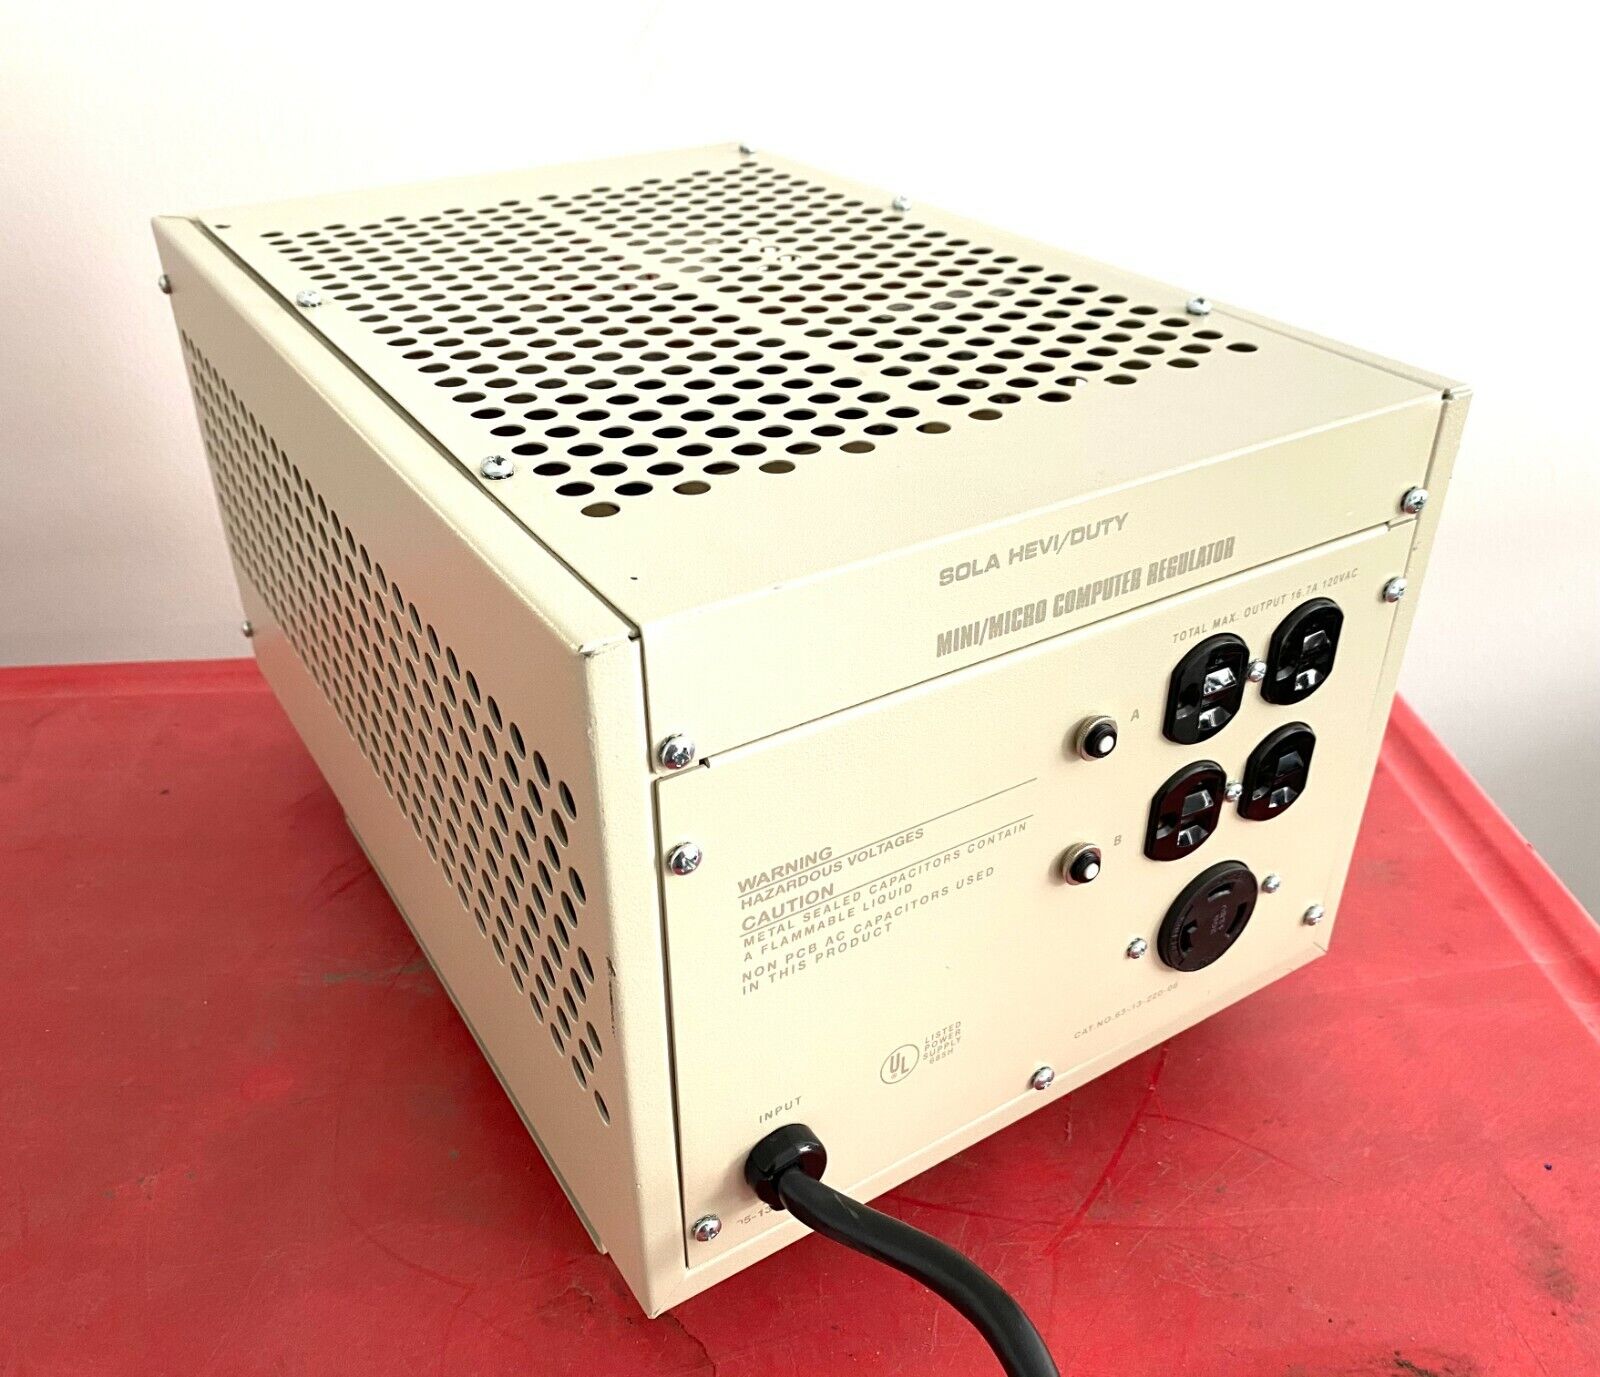 Sola 63-13-220-06 MCR 2000 Mini/Micro Computer Regulator